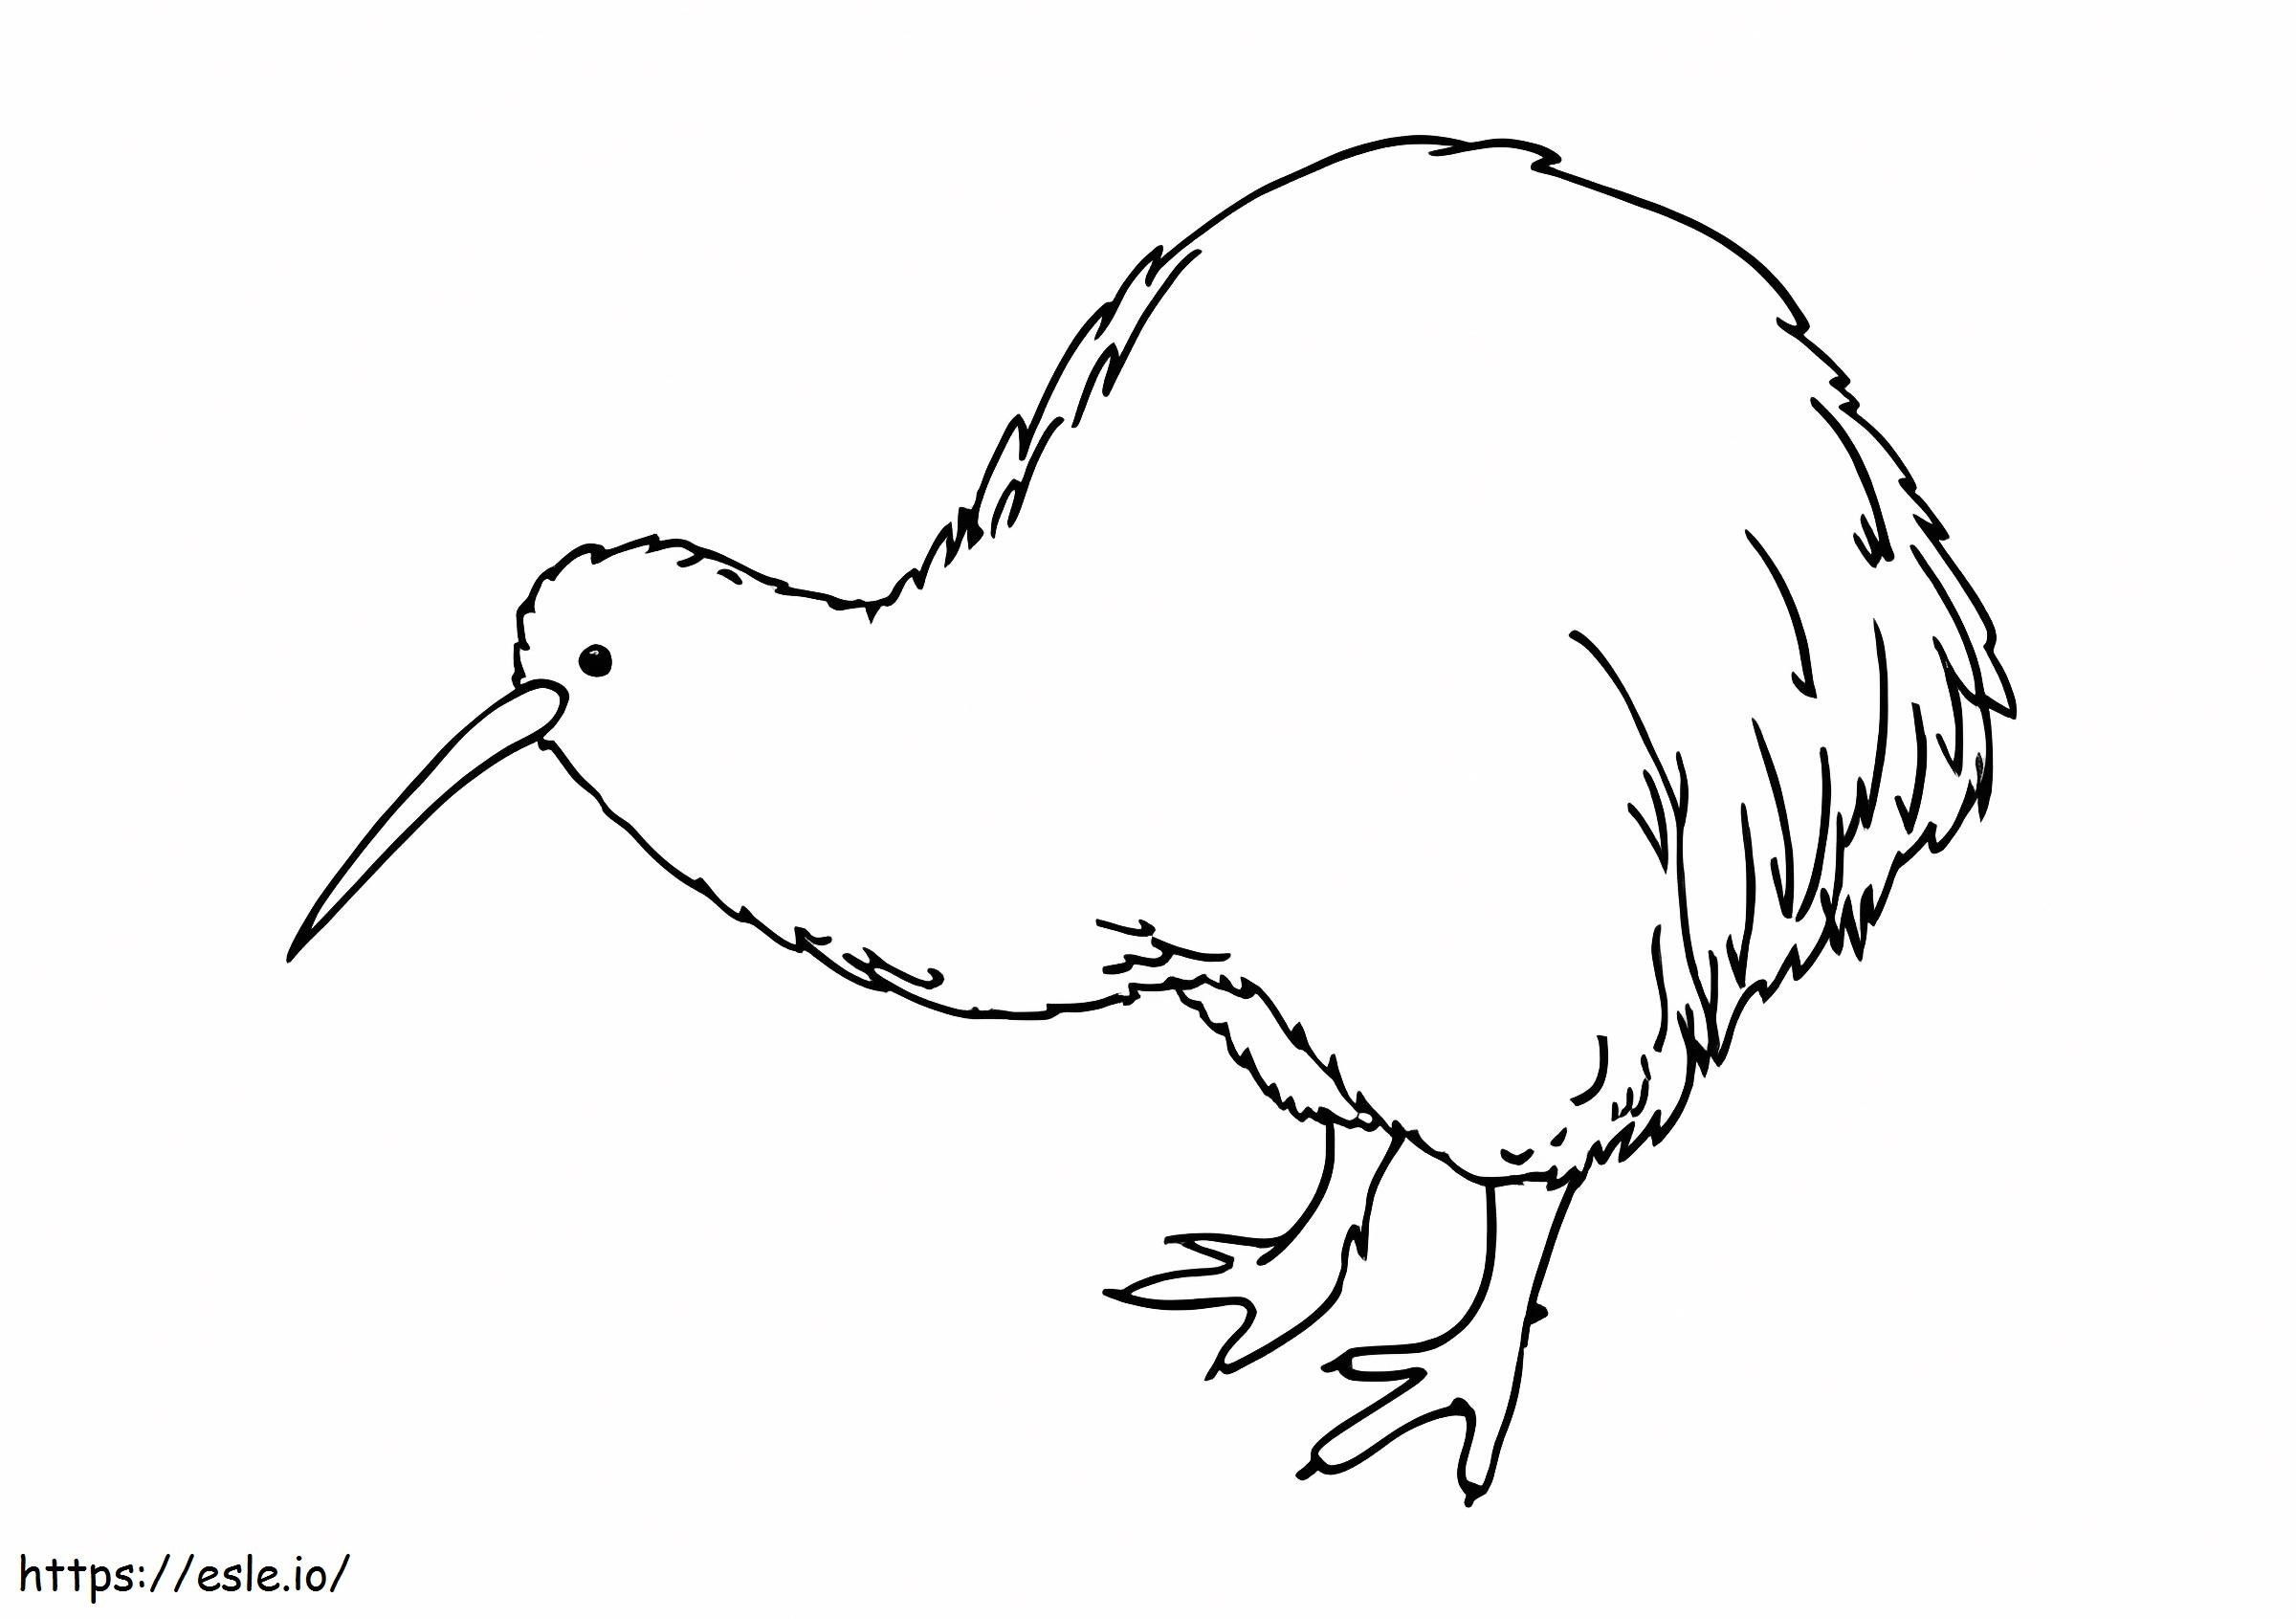 Impressionante pássaro Kiwi para colorir